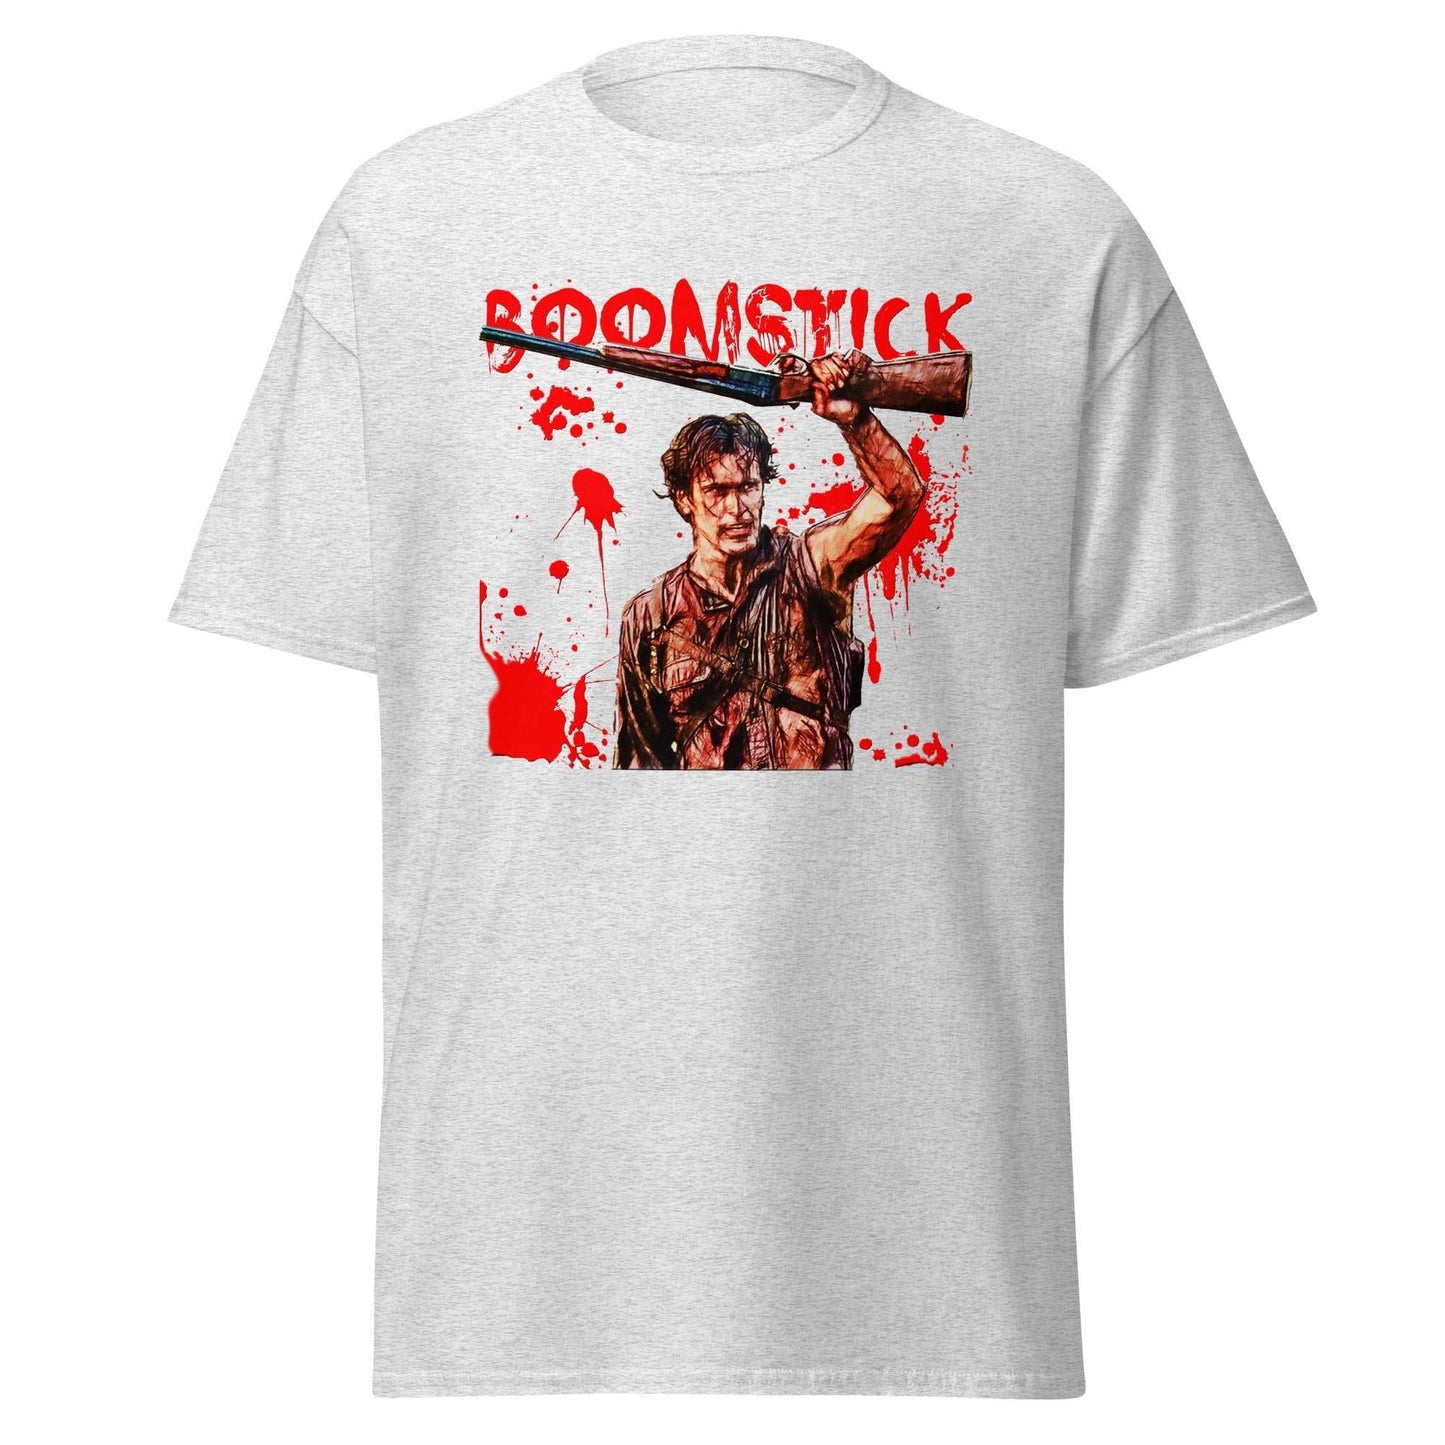 Boomstick T-Shirt - Horror Fans' Evil Dead Delight - thenightmareinc